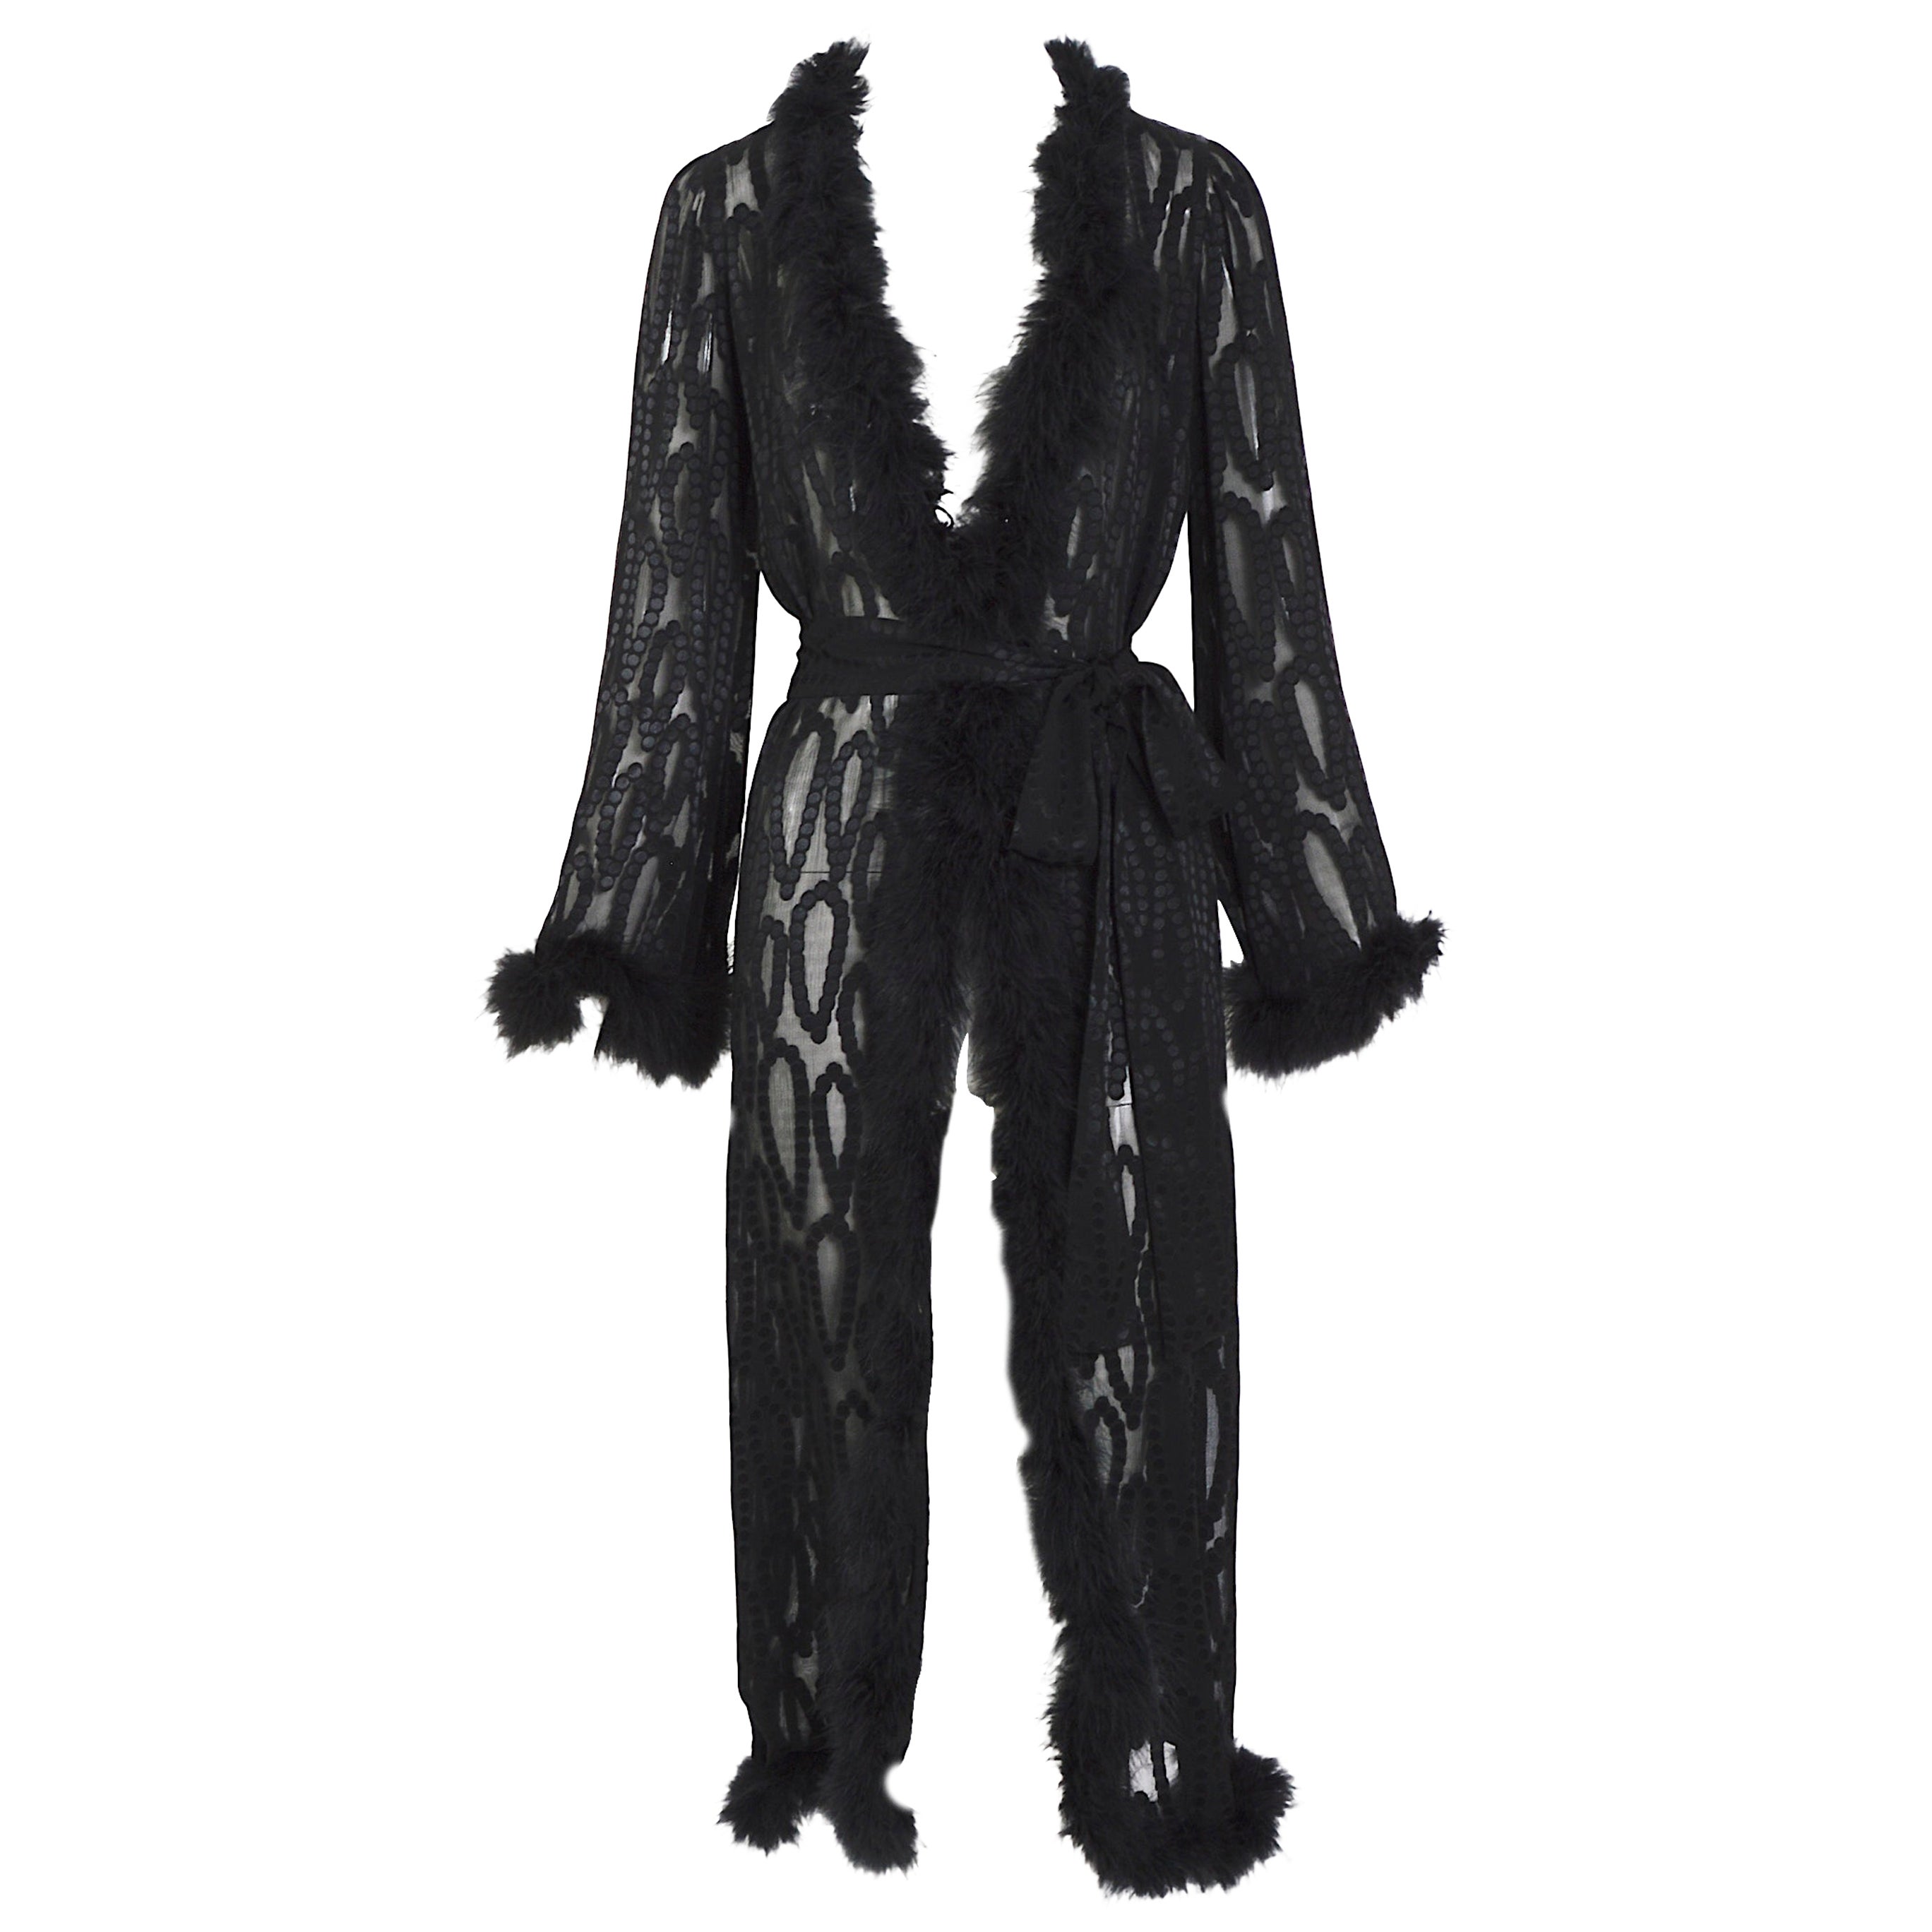 Vintage 70s Yves Saint Laurent marabou feathers trimmed black silk evening coat